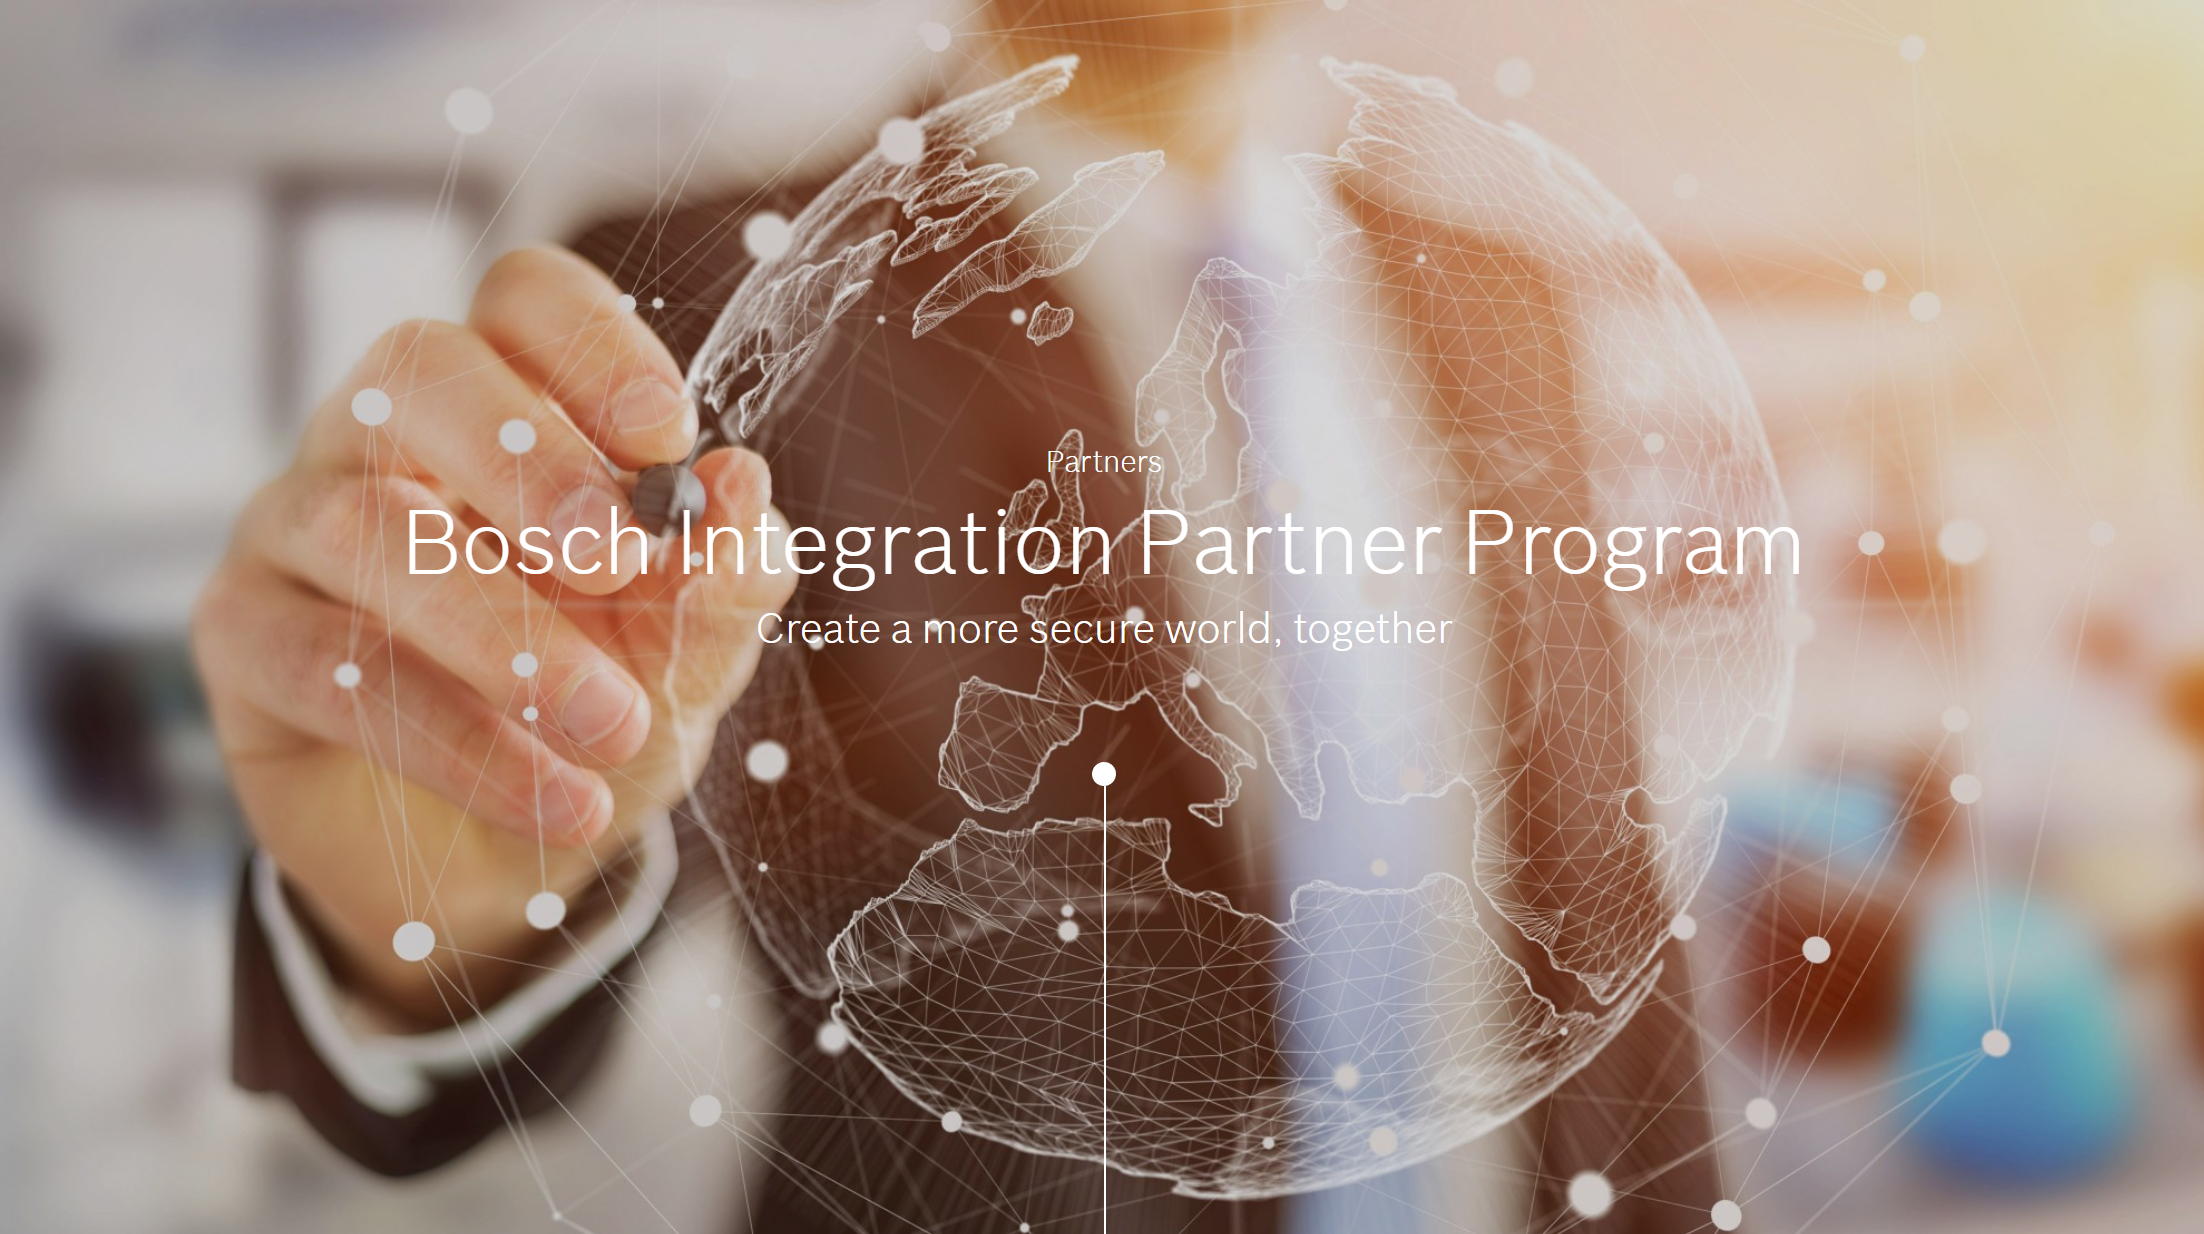 Bosch IPP portal image